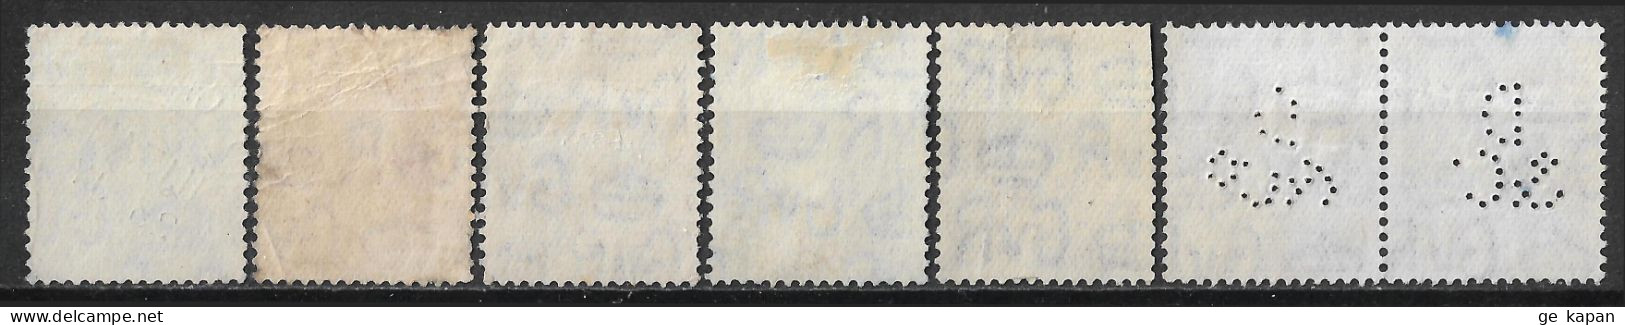 1934-1936 GREAT BRITAIN Set Of 7 Used Stamps (Scott # 210-212,214,215,220) CV $7.40 - Usati